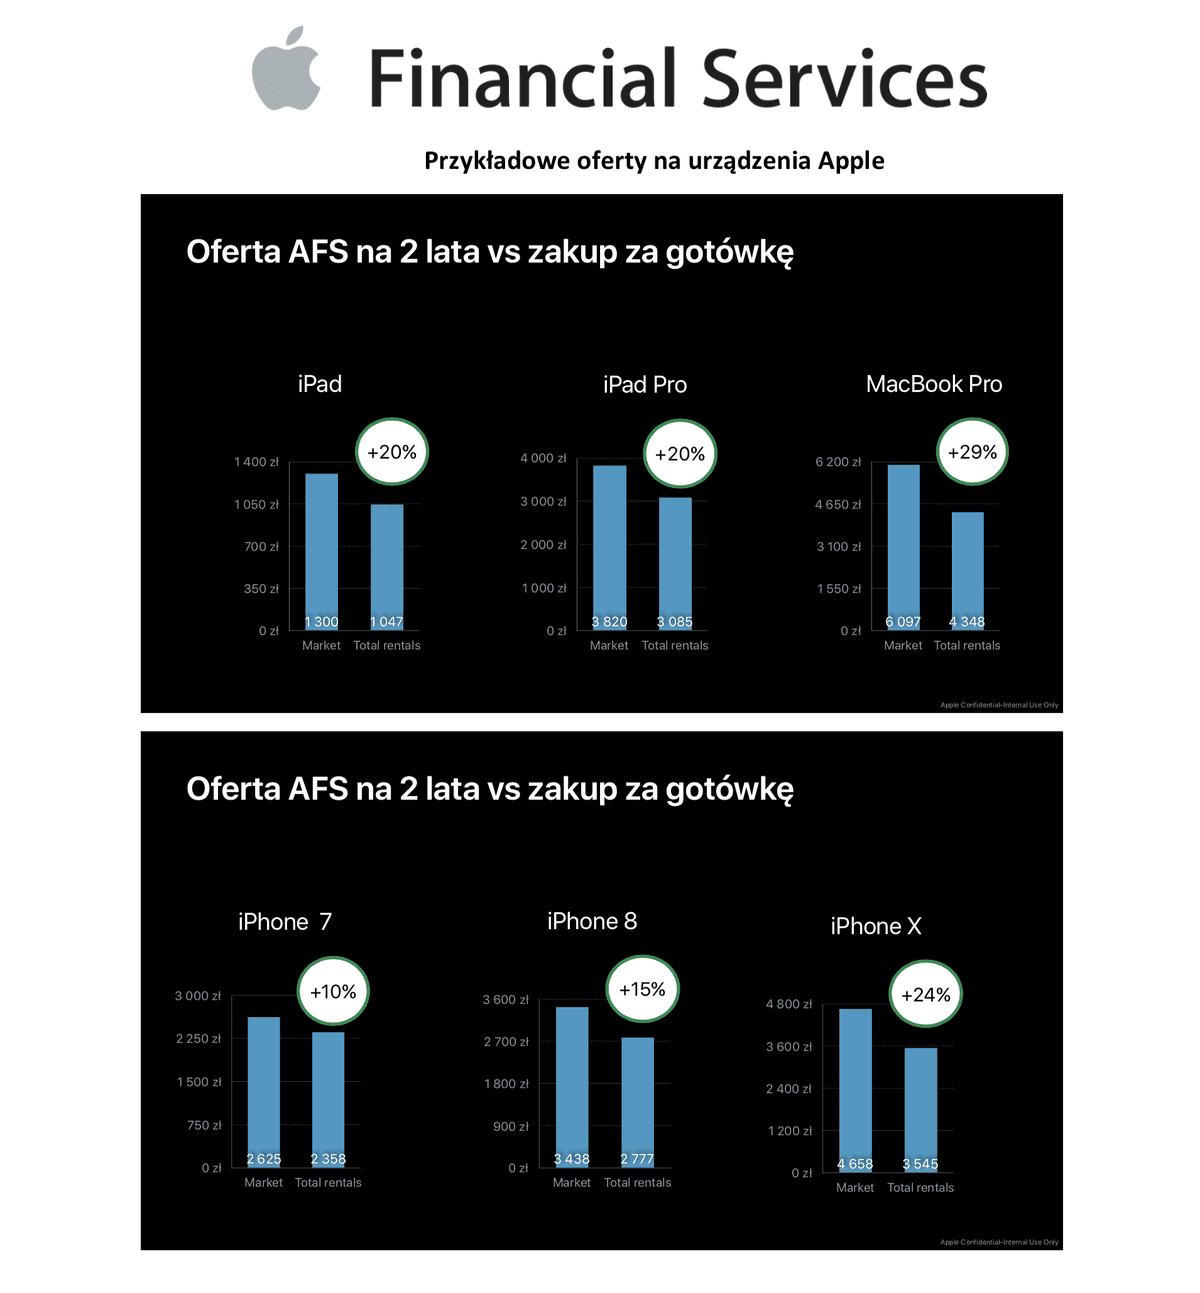 Apple Financial Services w Polsce - ile to kosztuje? class="wp-image-789199" title="Apple Financial Services w Polsce - ile to kosztuje?" 